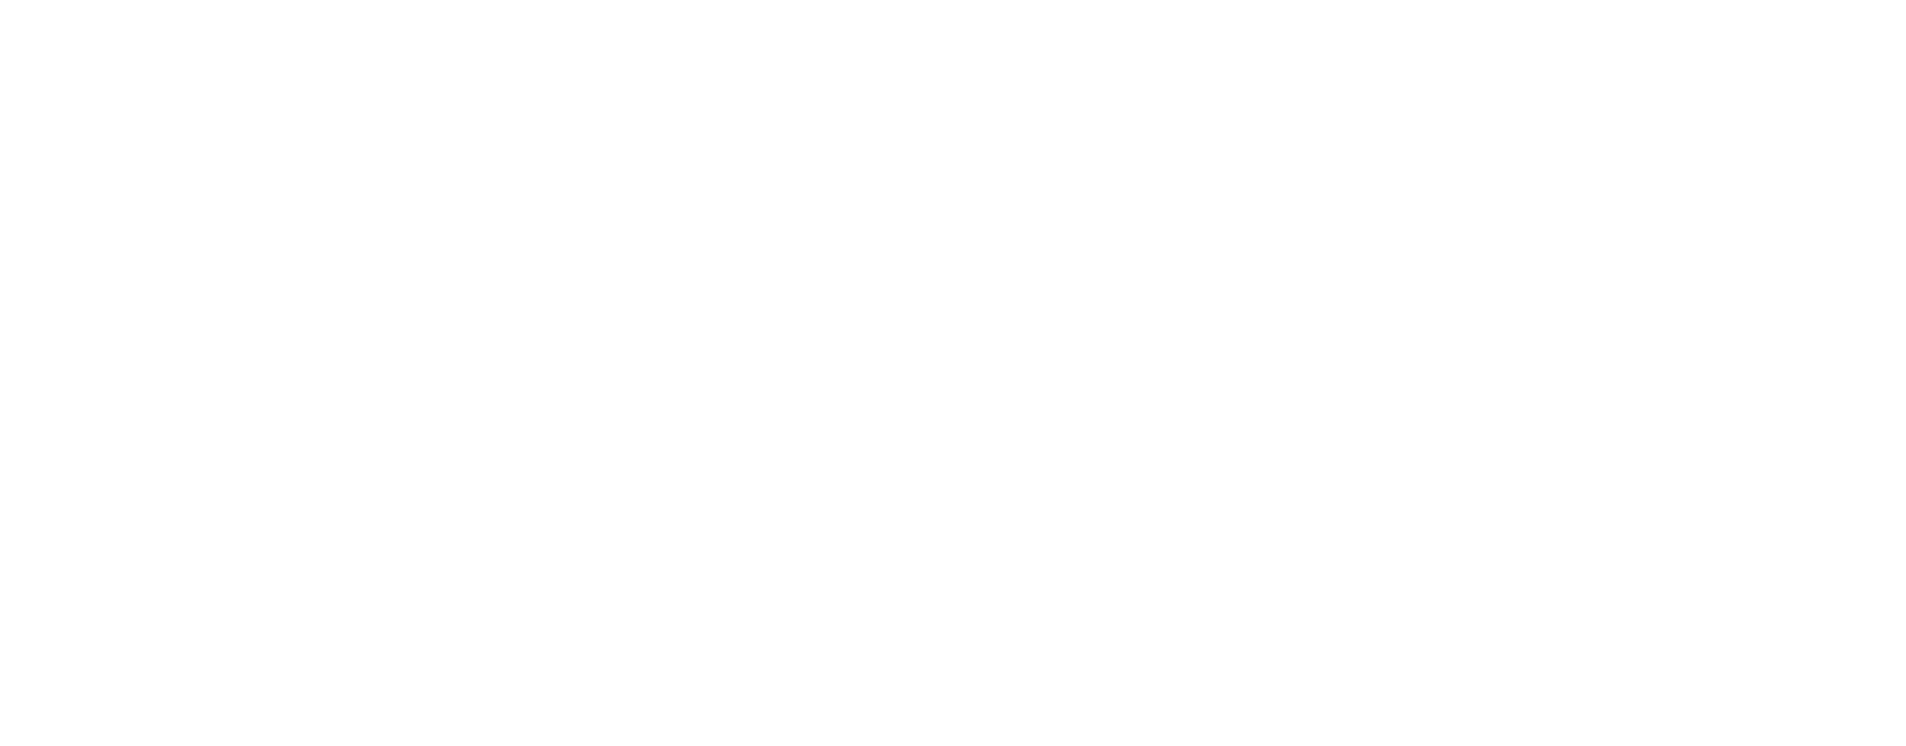 Waukesha Sunrise logo